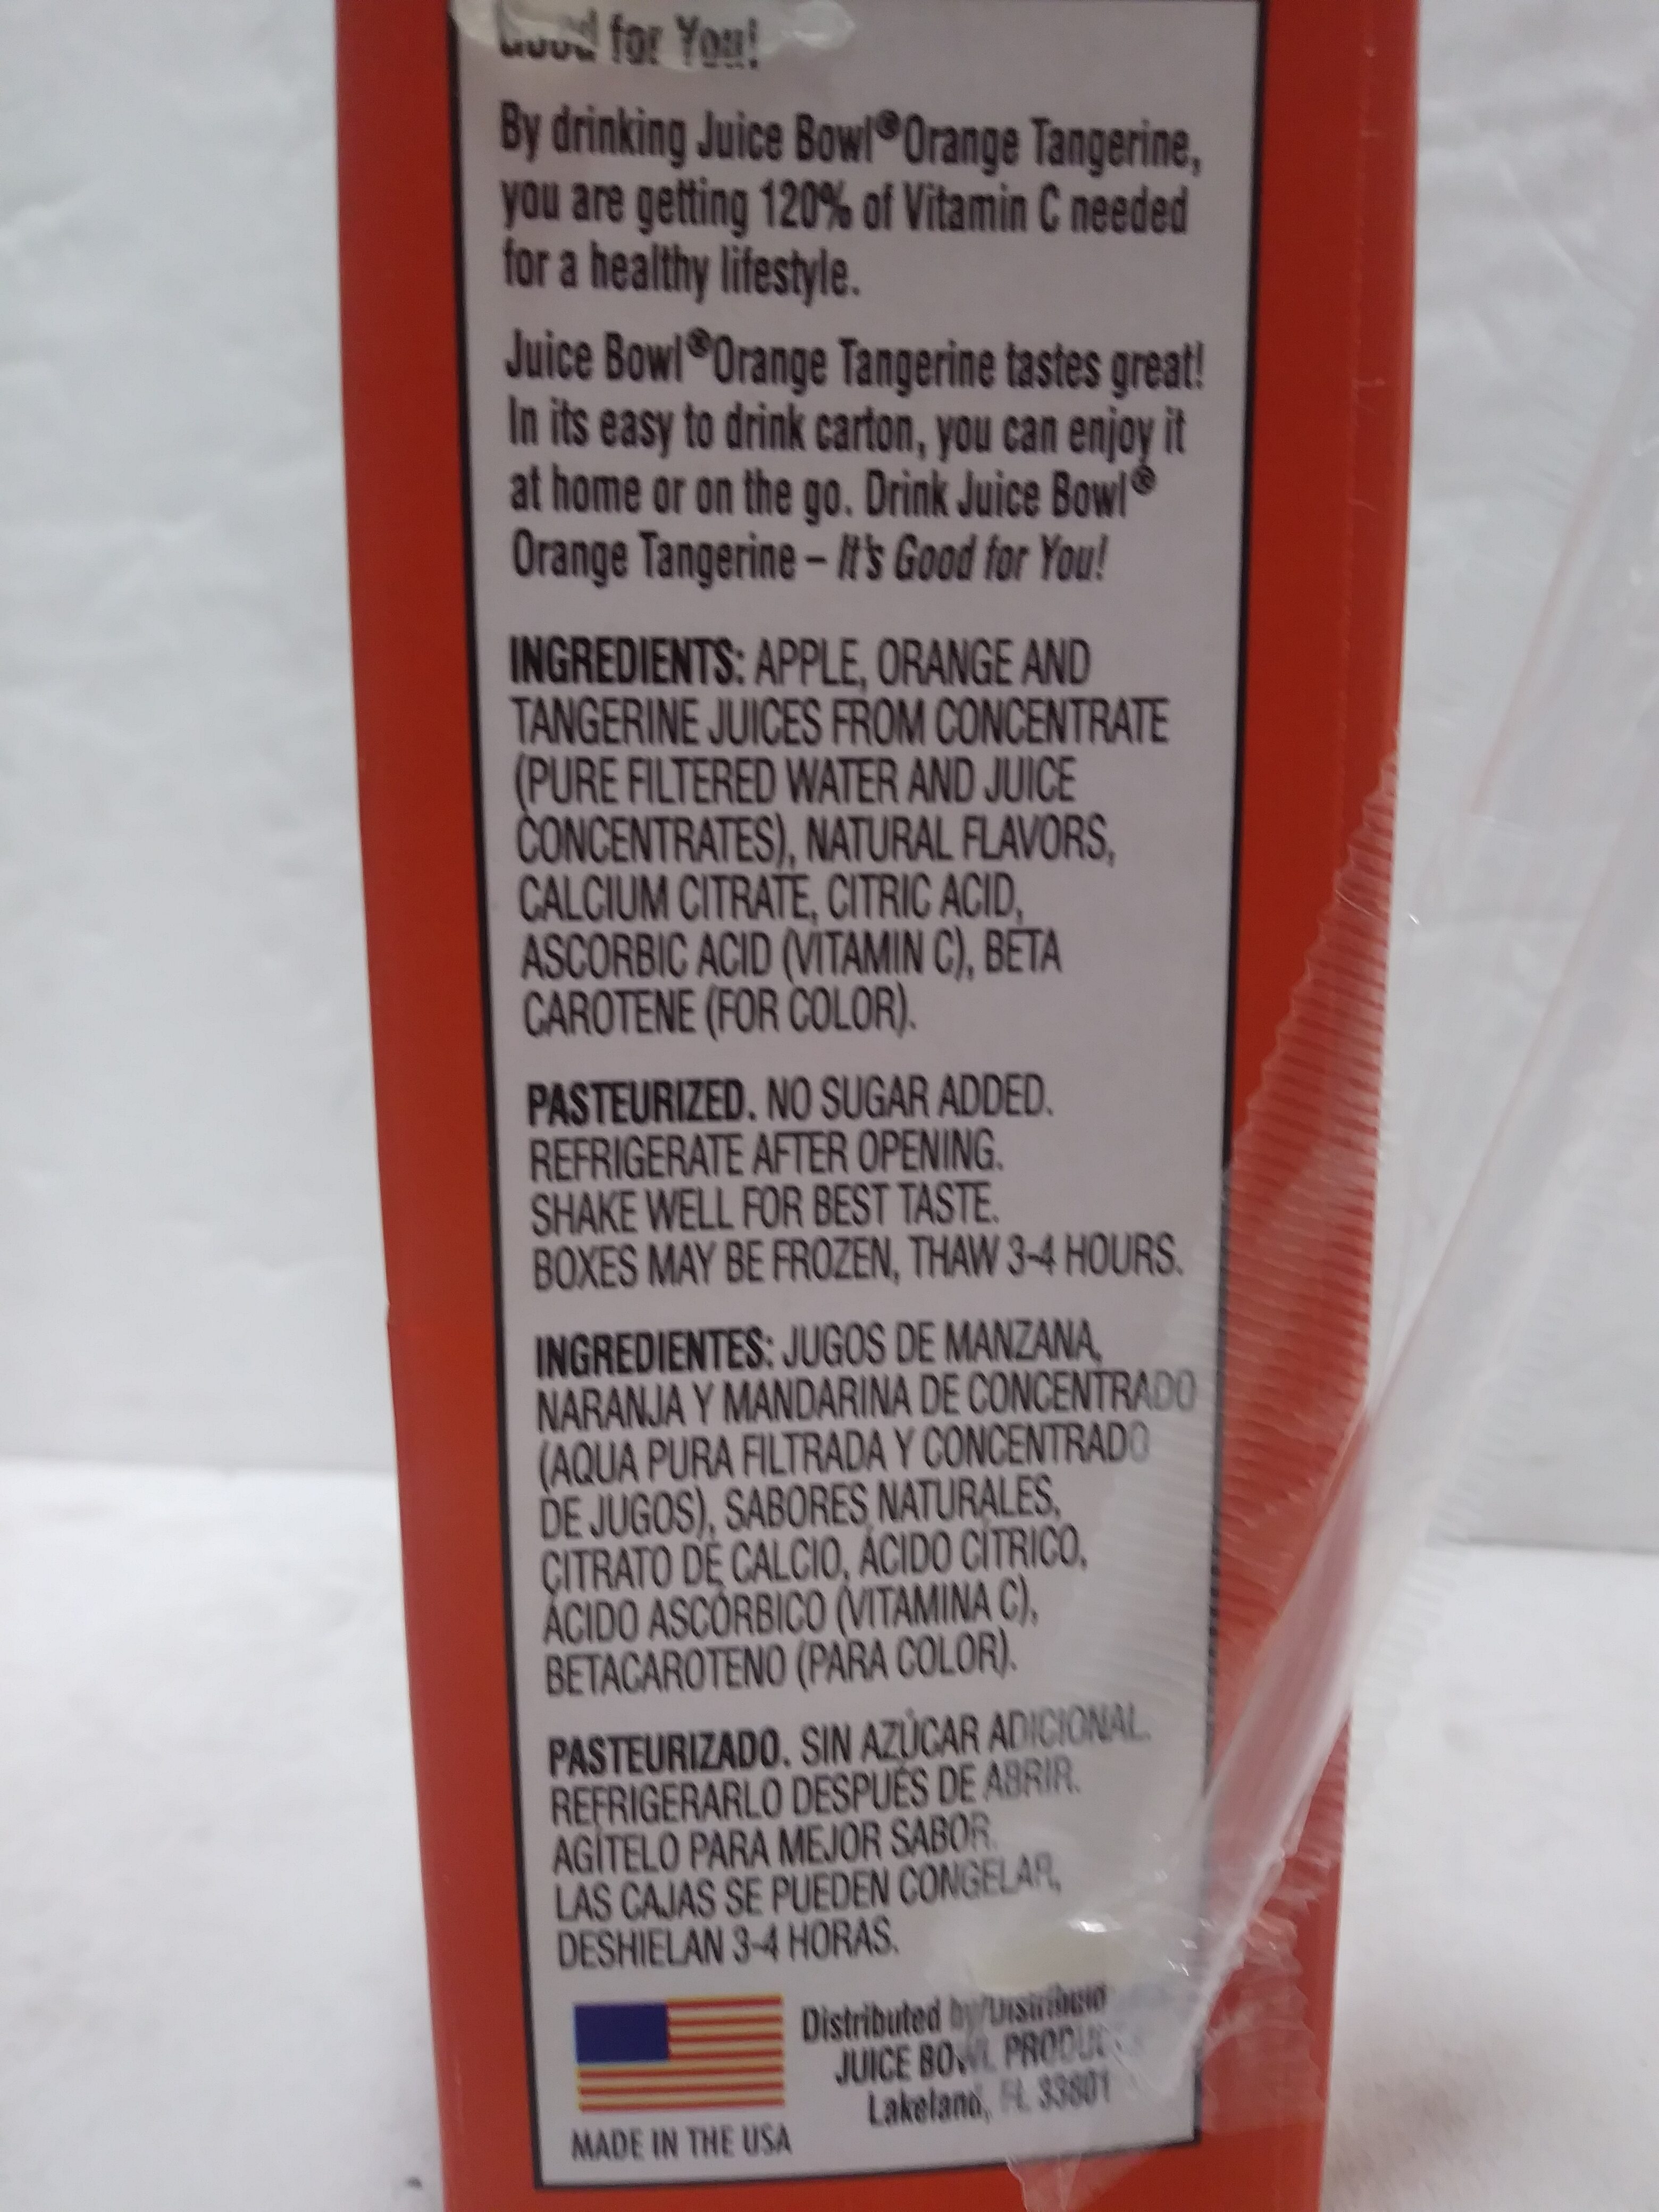 Orange tangerine - Ingredients